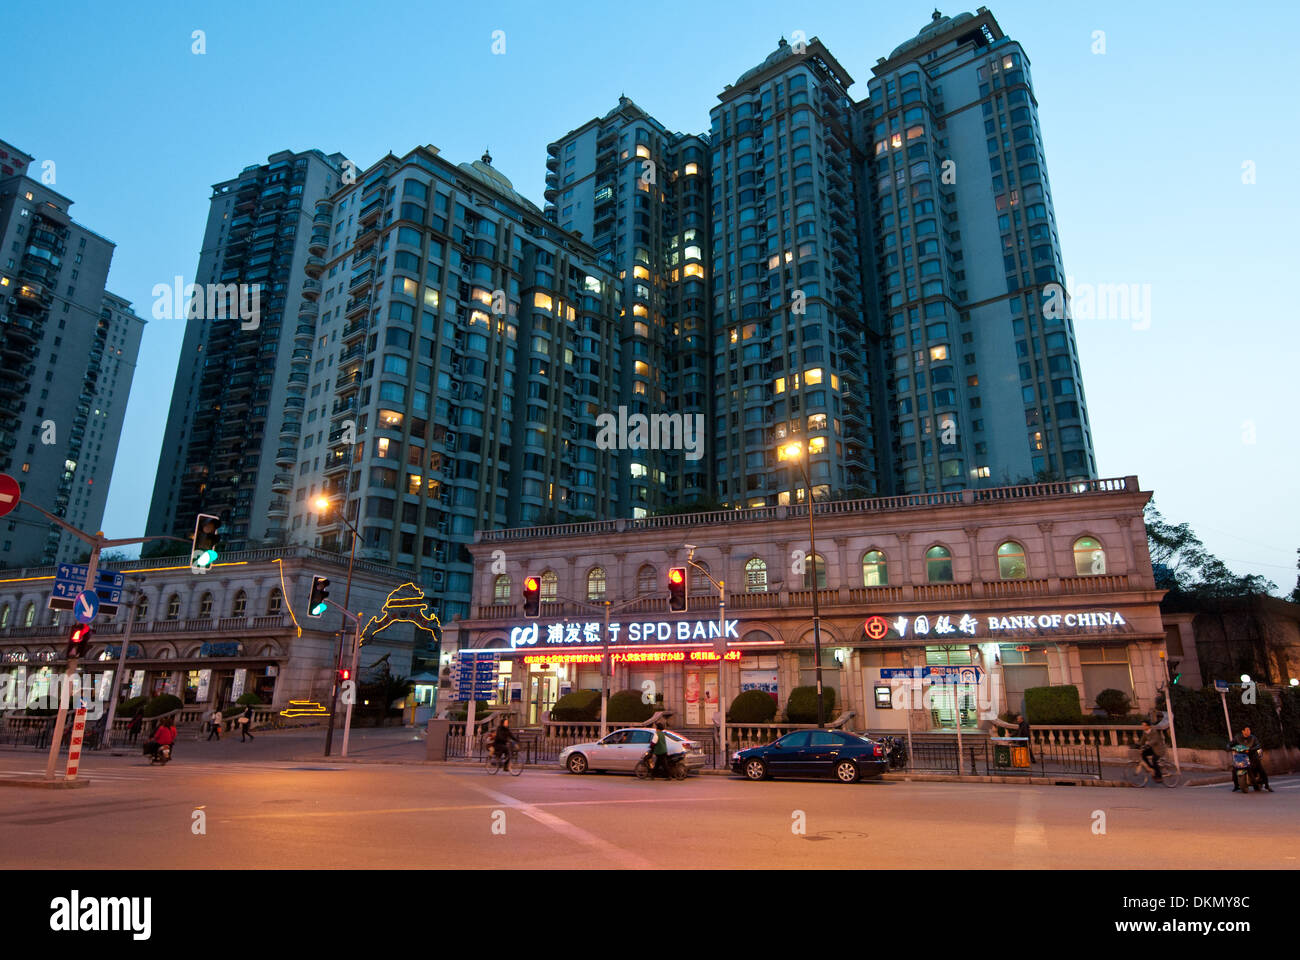 Riesige Wohnung Haus in Henan-Süd-Straße mit SPD-Bank und Bank of China Büros, Huangpu District, Shanghai, China Stockfoto